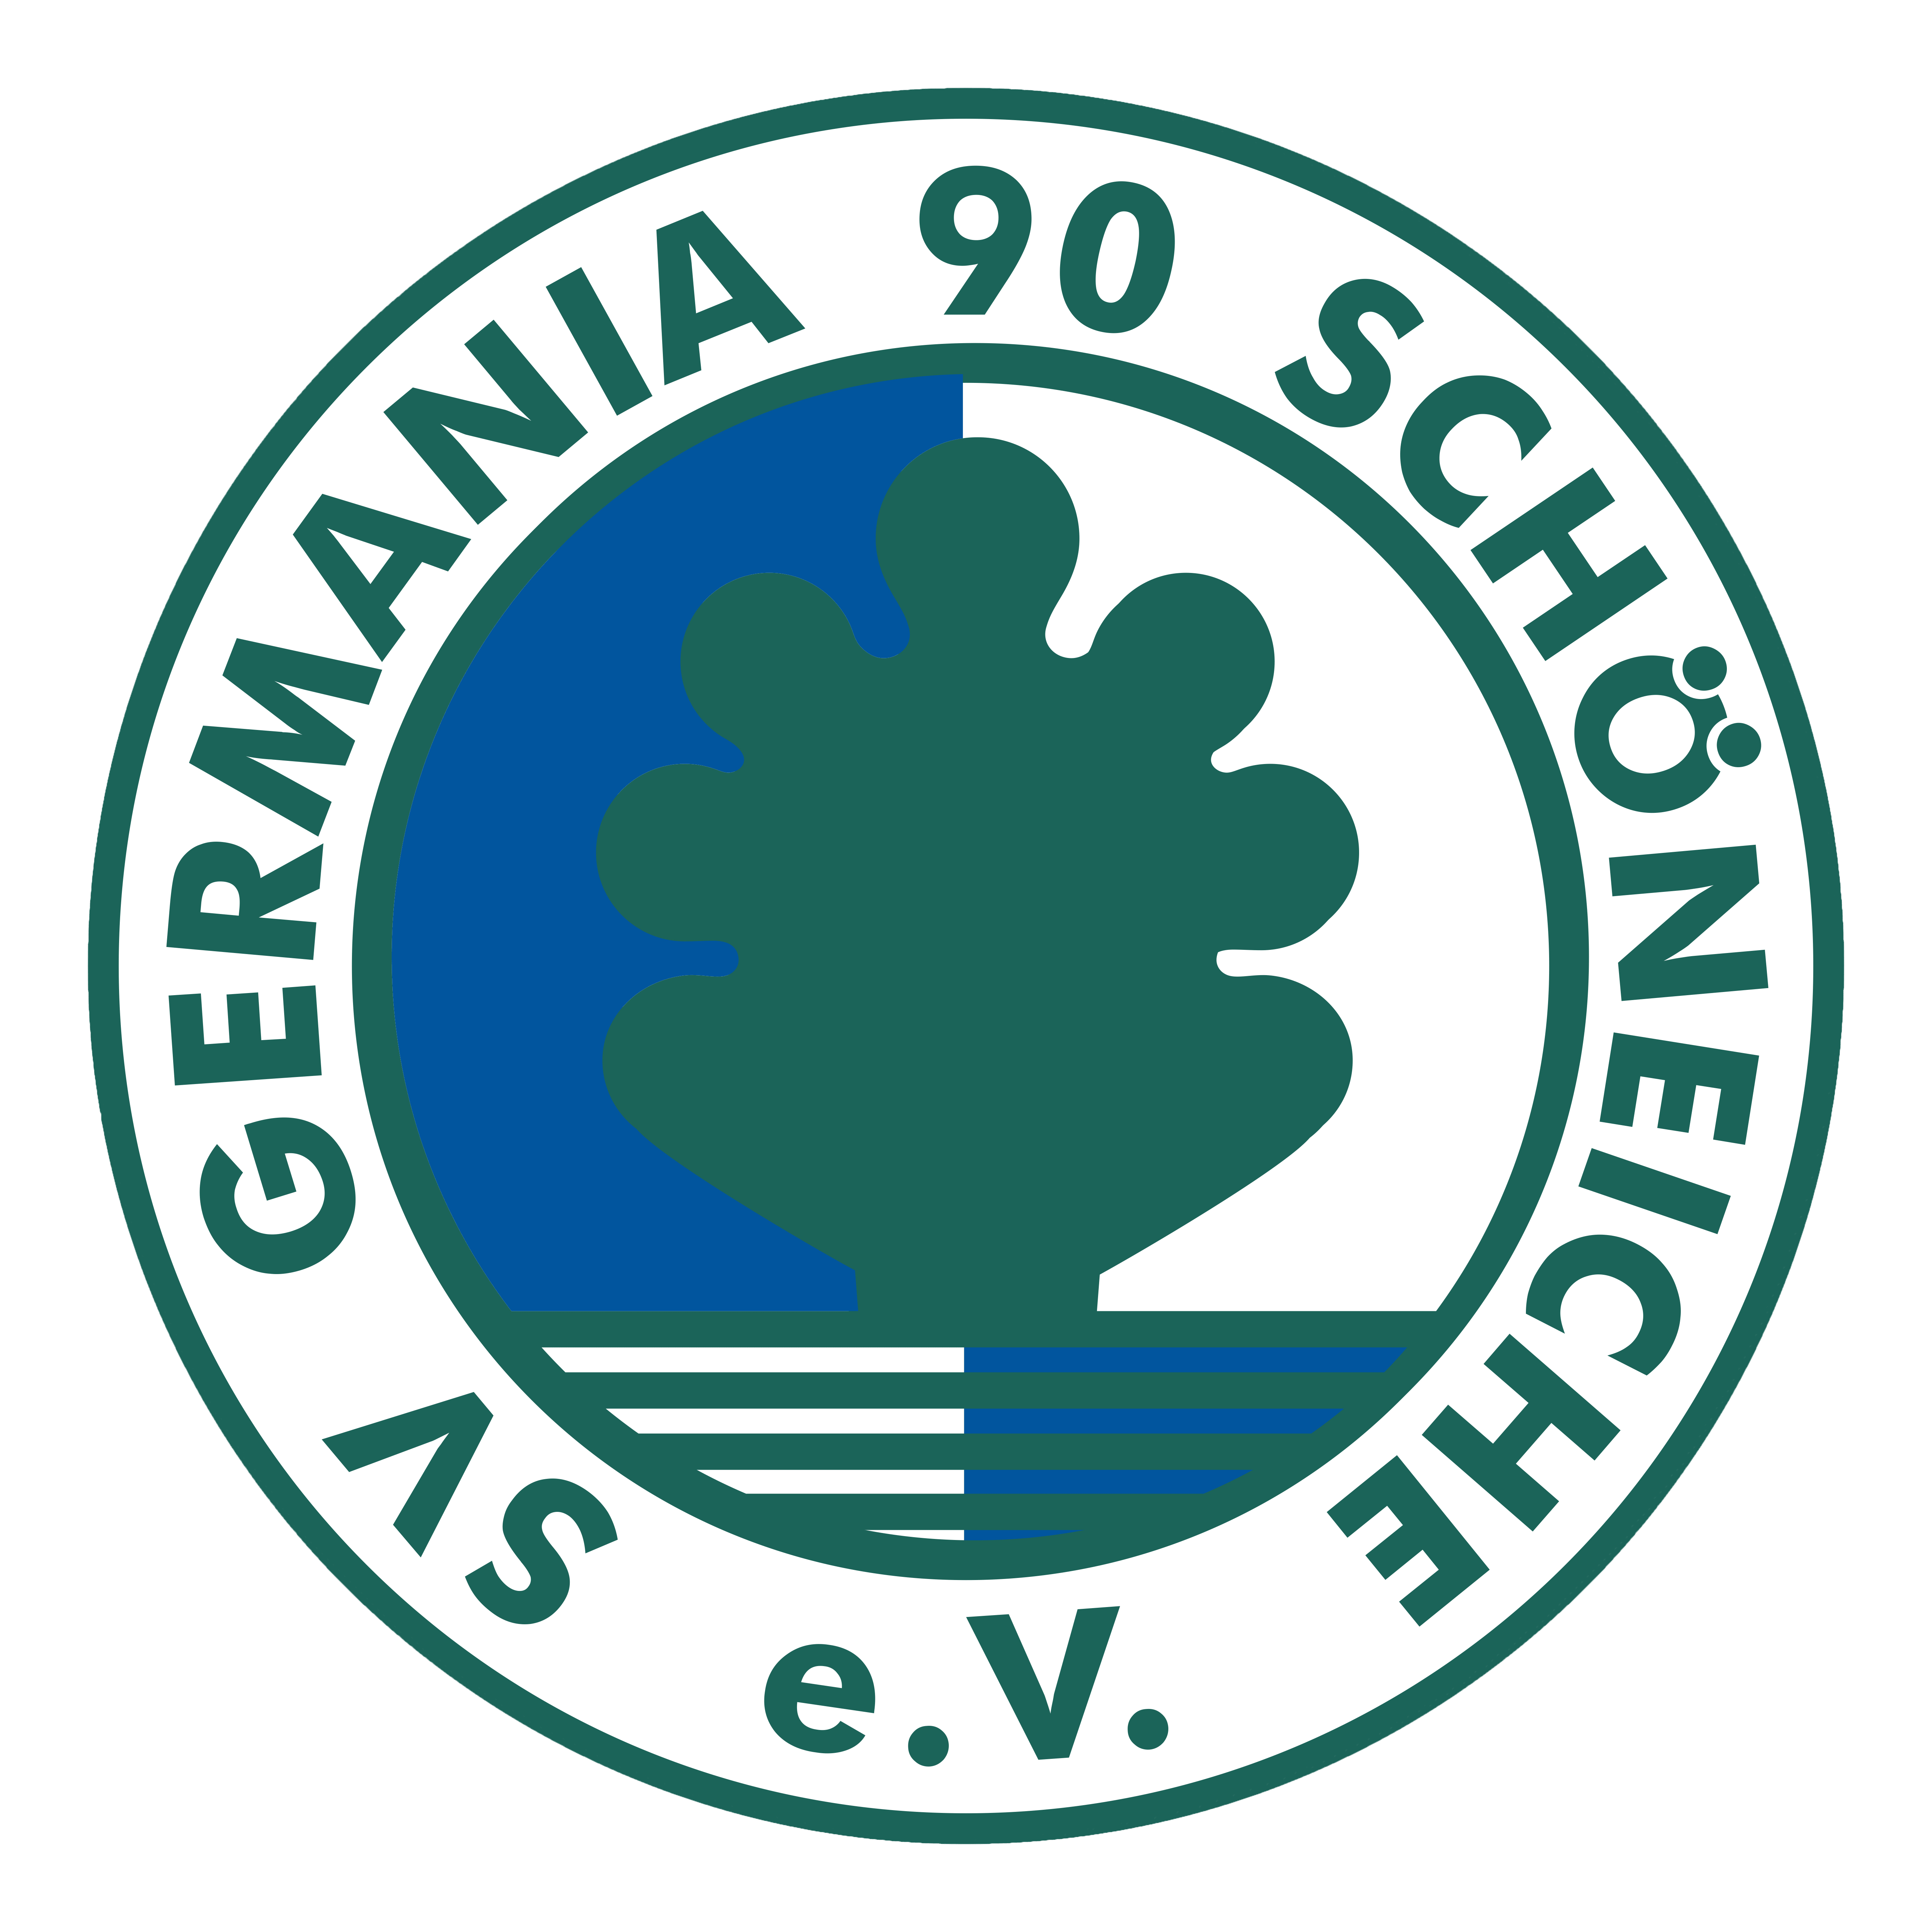 germania-logo